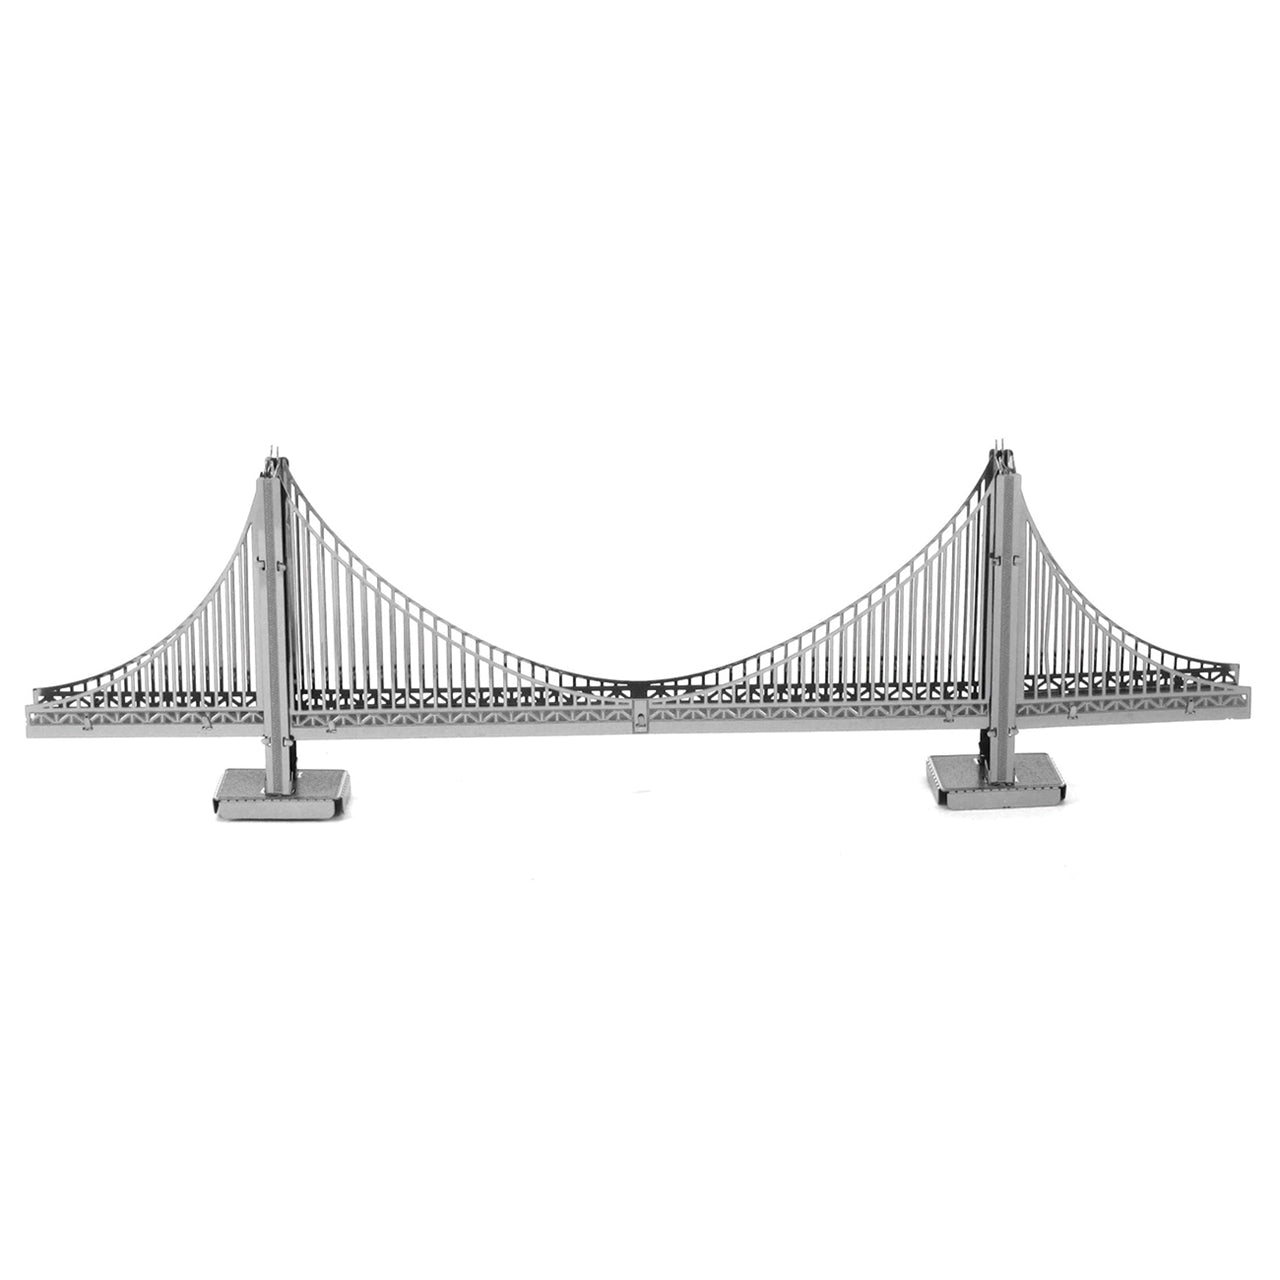 FMW001 San Francisco Golden Gate Bridge (Buildable) 